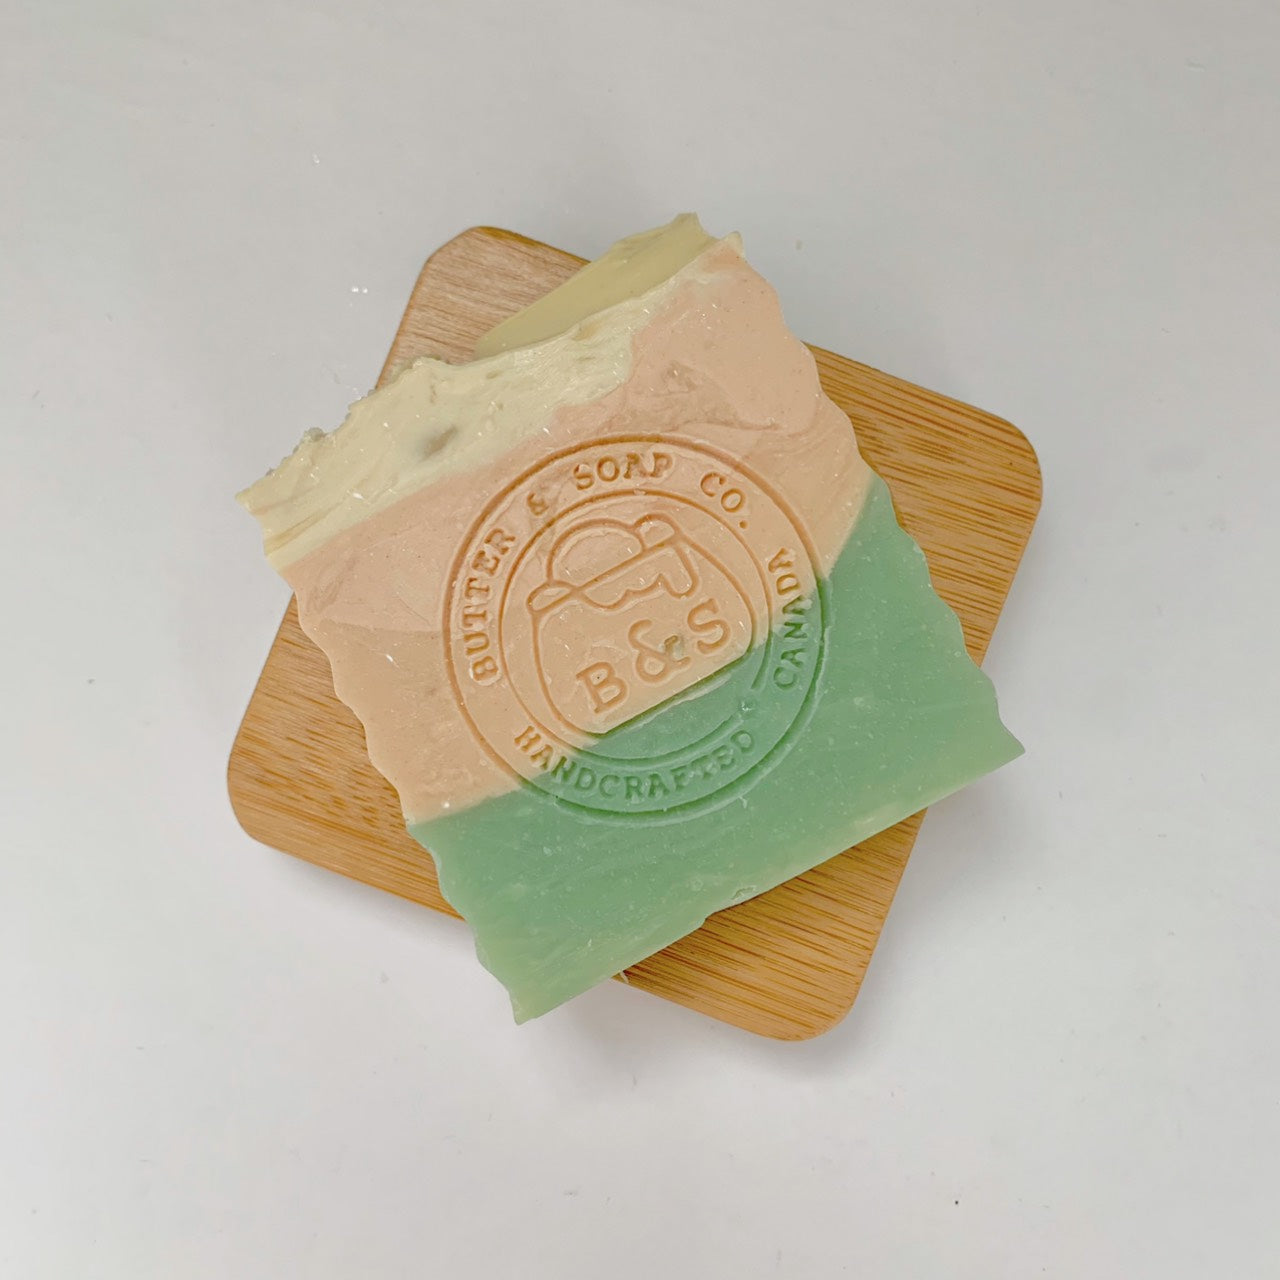 Natural Lemongrass Coconut Milk Soap